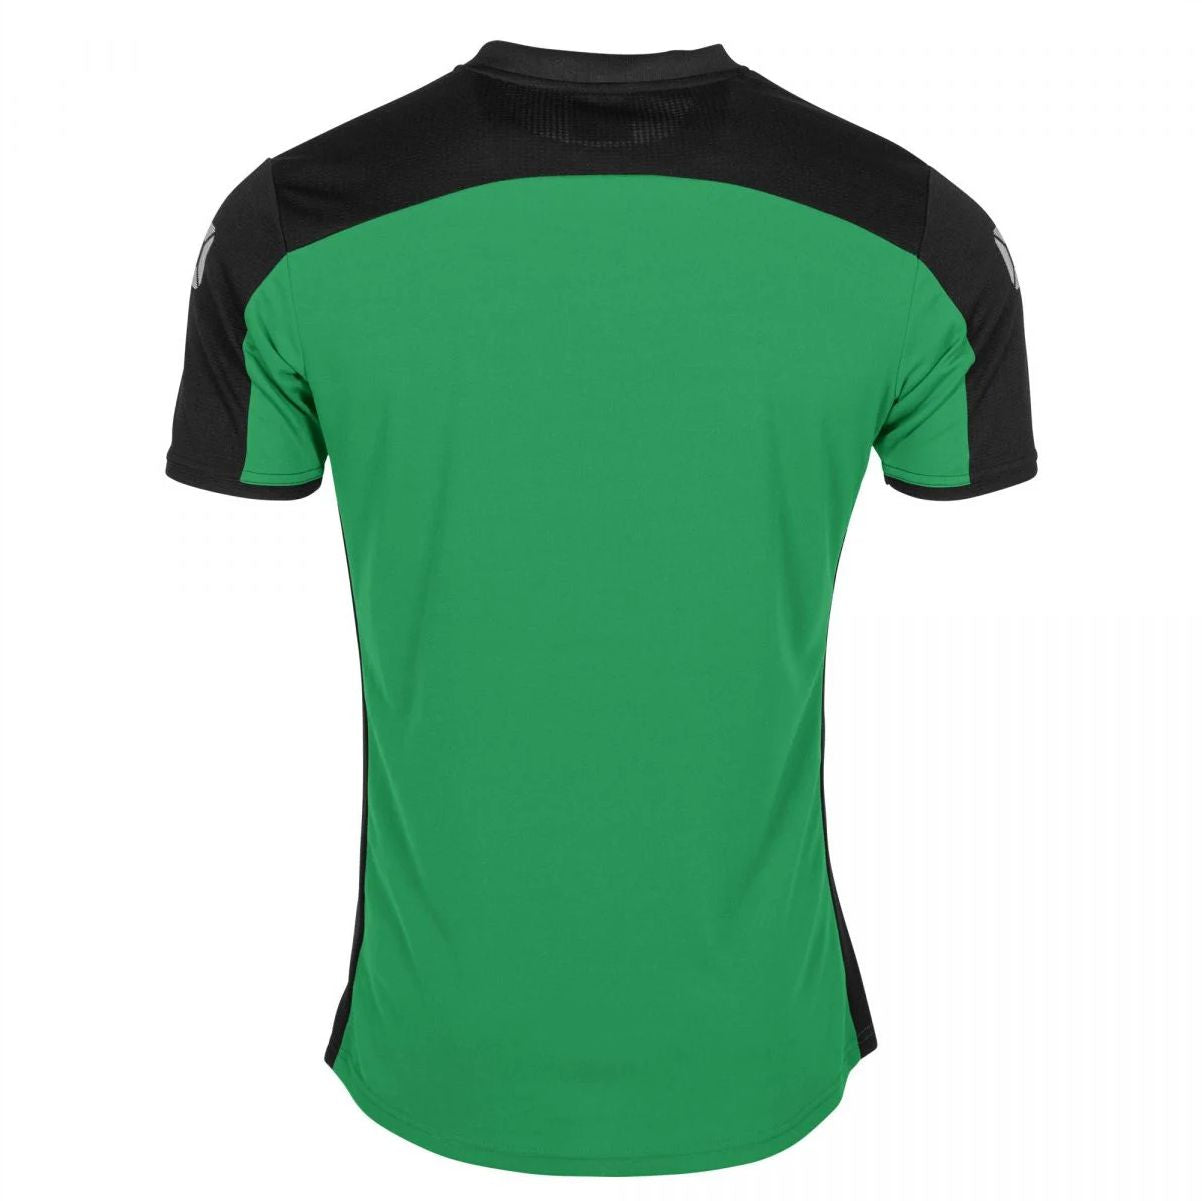 Stanno - Pride Shirt - Green & Black - Junior